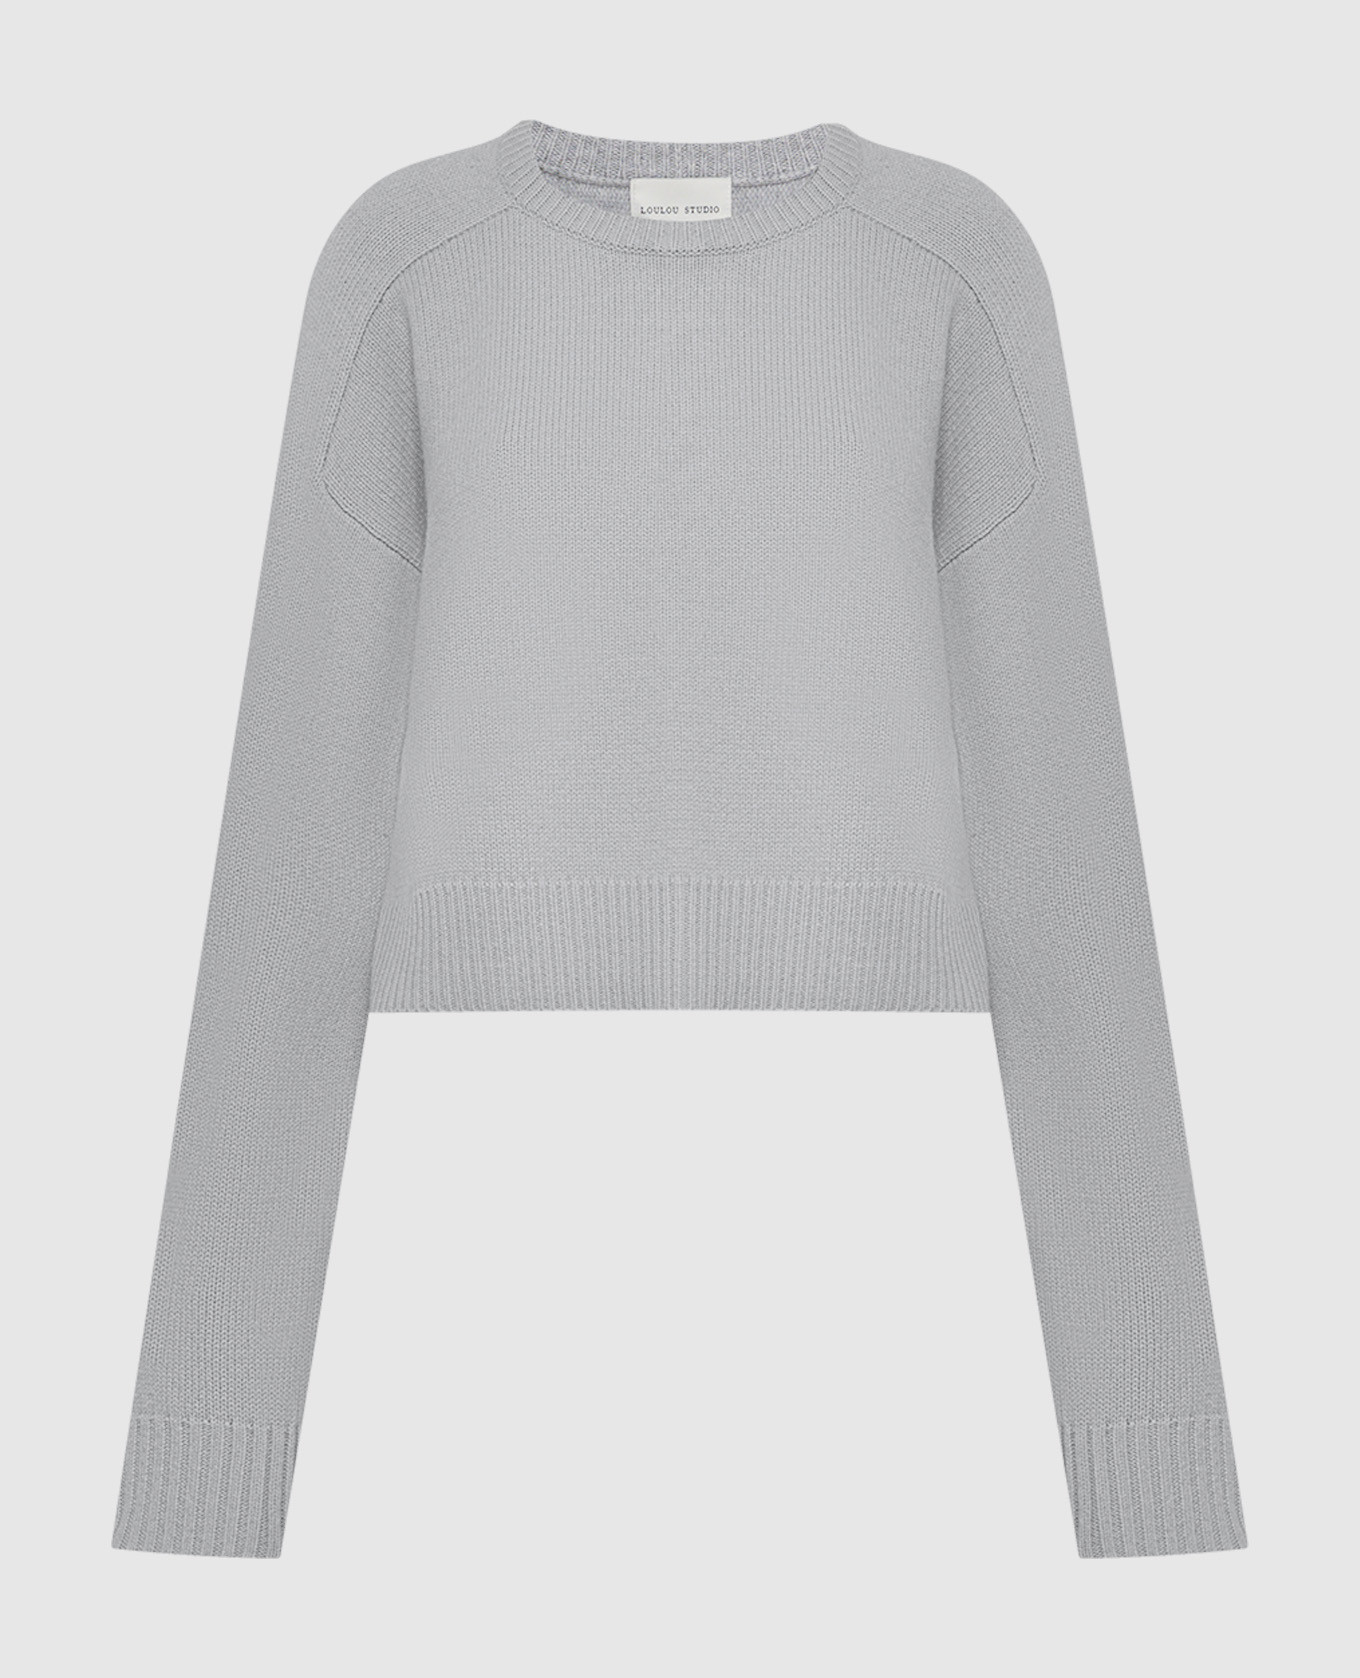 BRUZZI gray wool and cashmere sweater